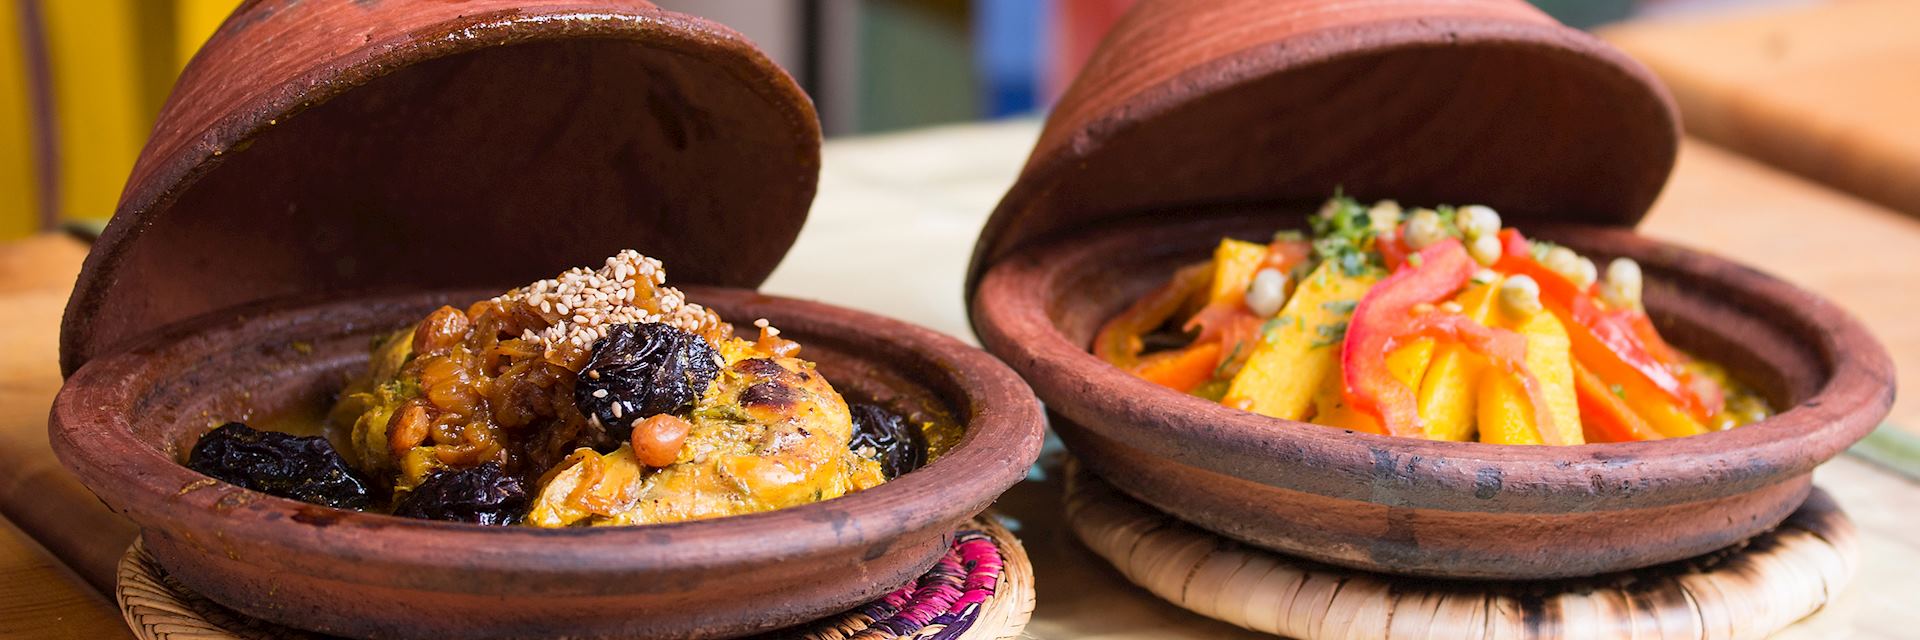 Moroccan cuisine